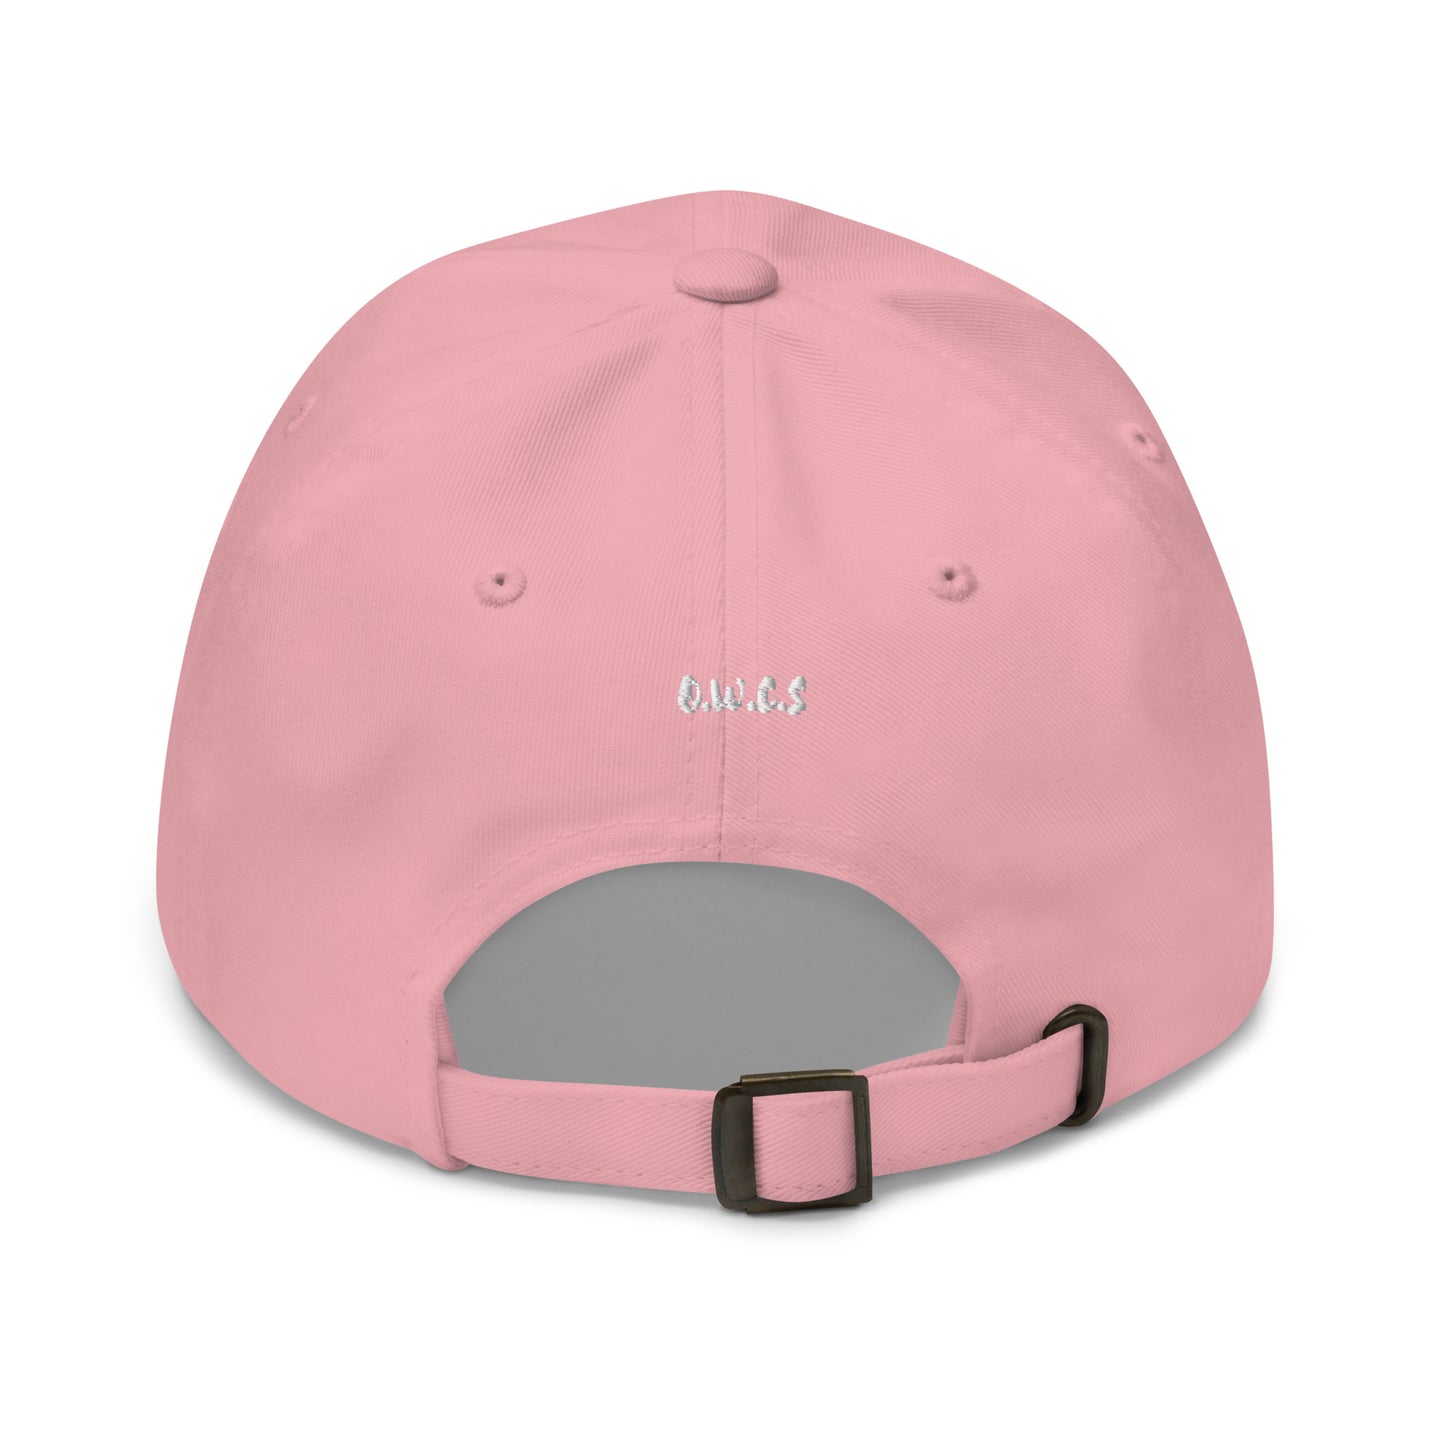 Christian hat pink color